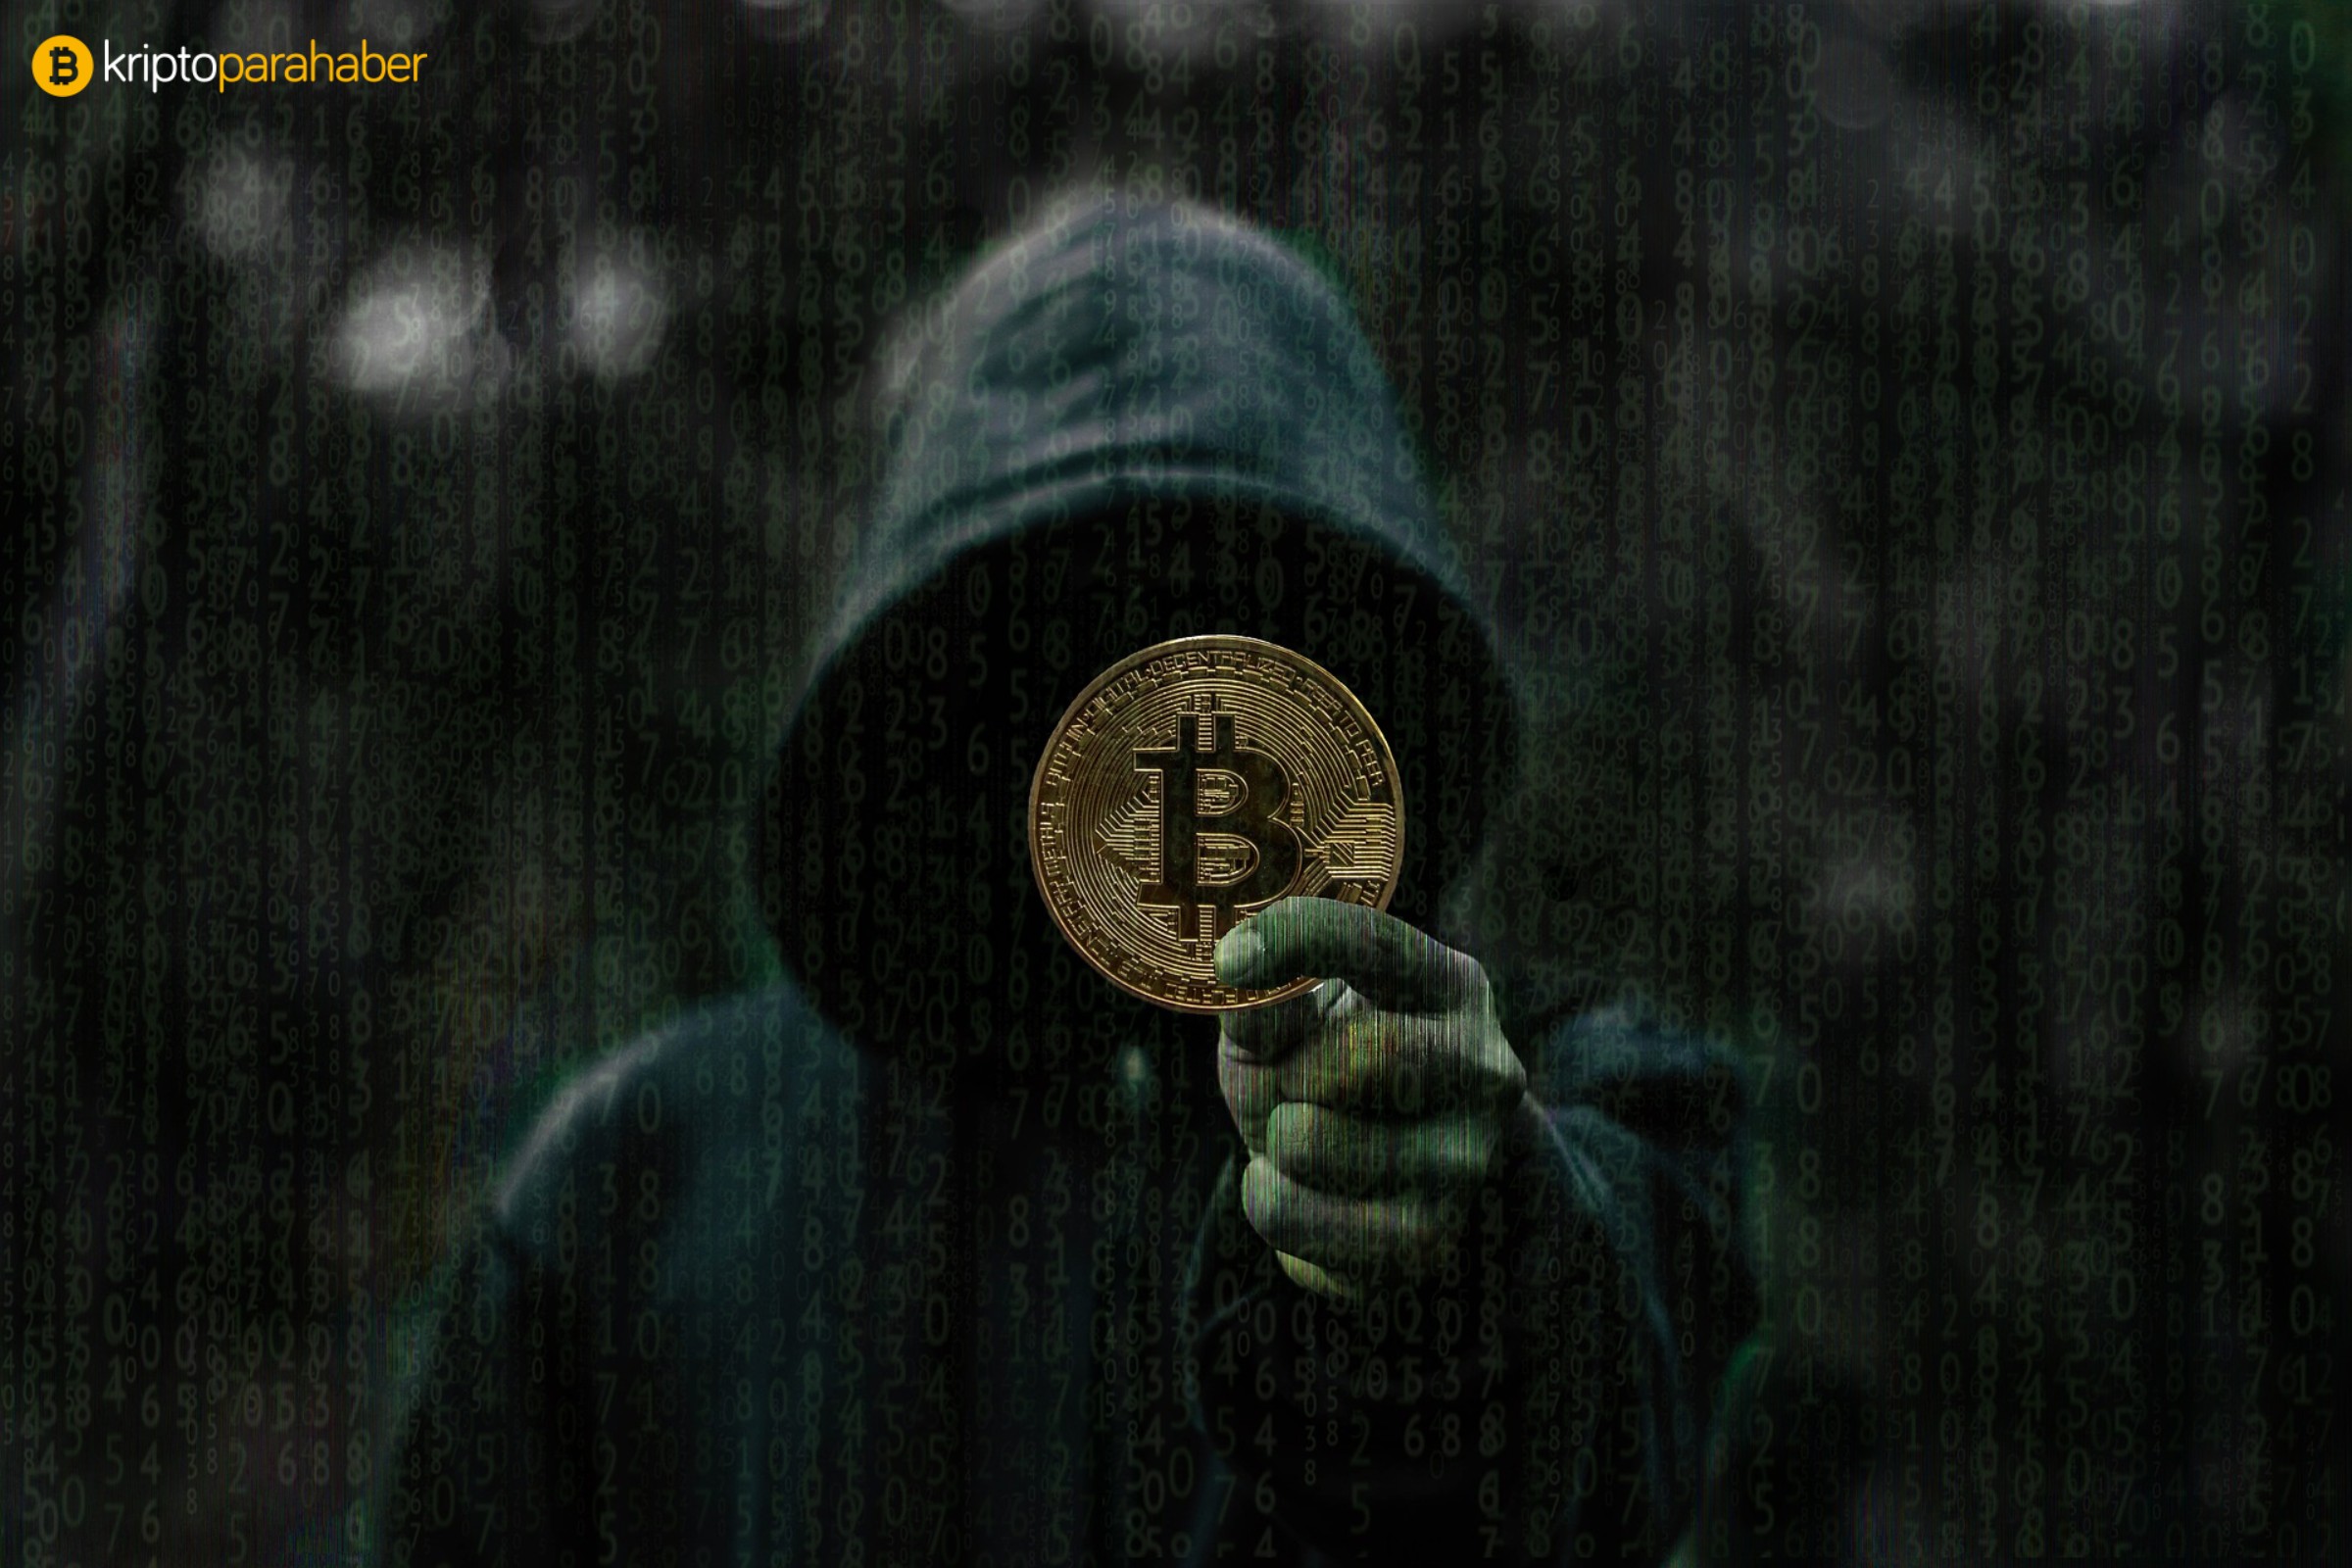 Make A Wish Vakfı, kripto hackerların son kurbanı - Kripto Para Haber